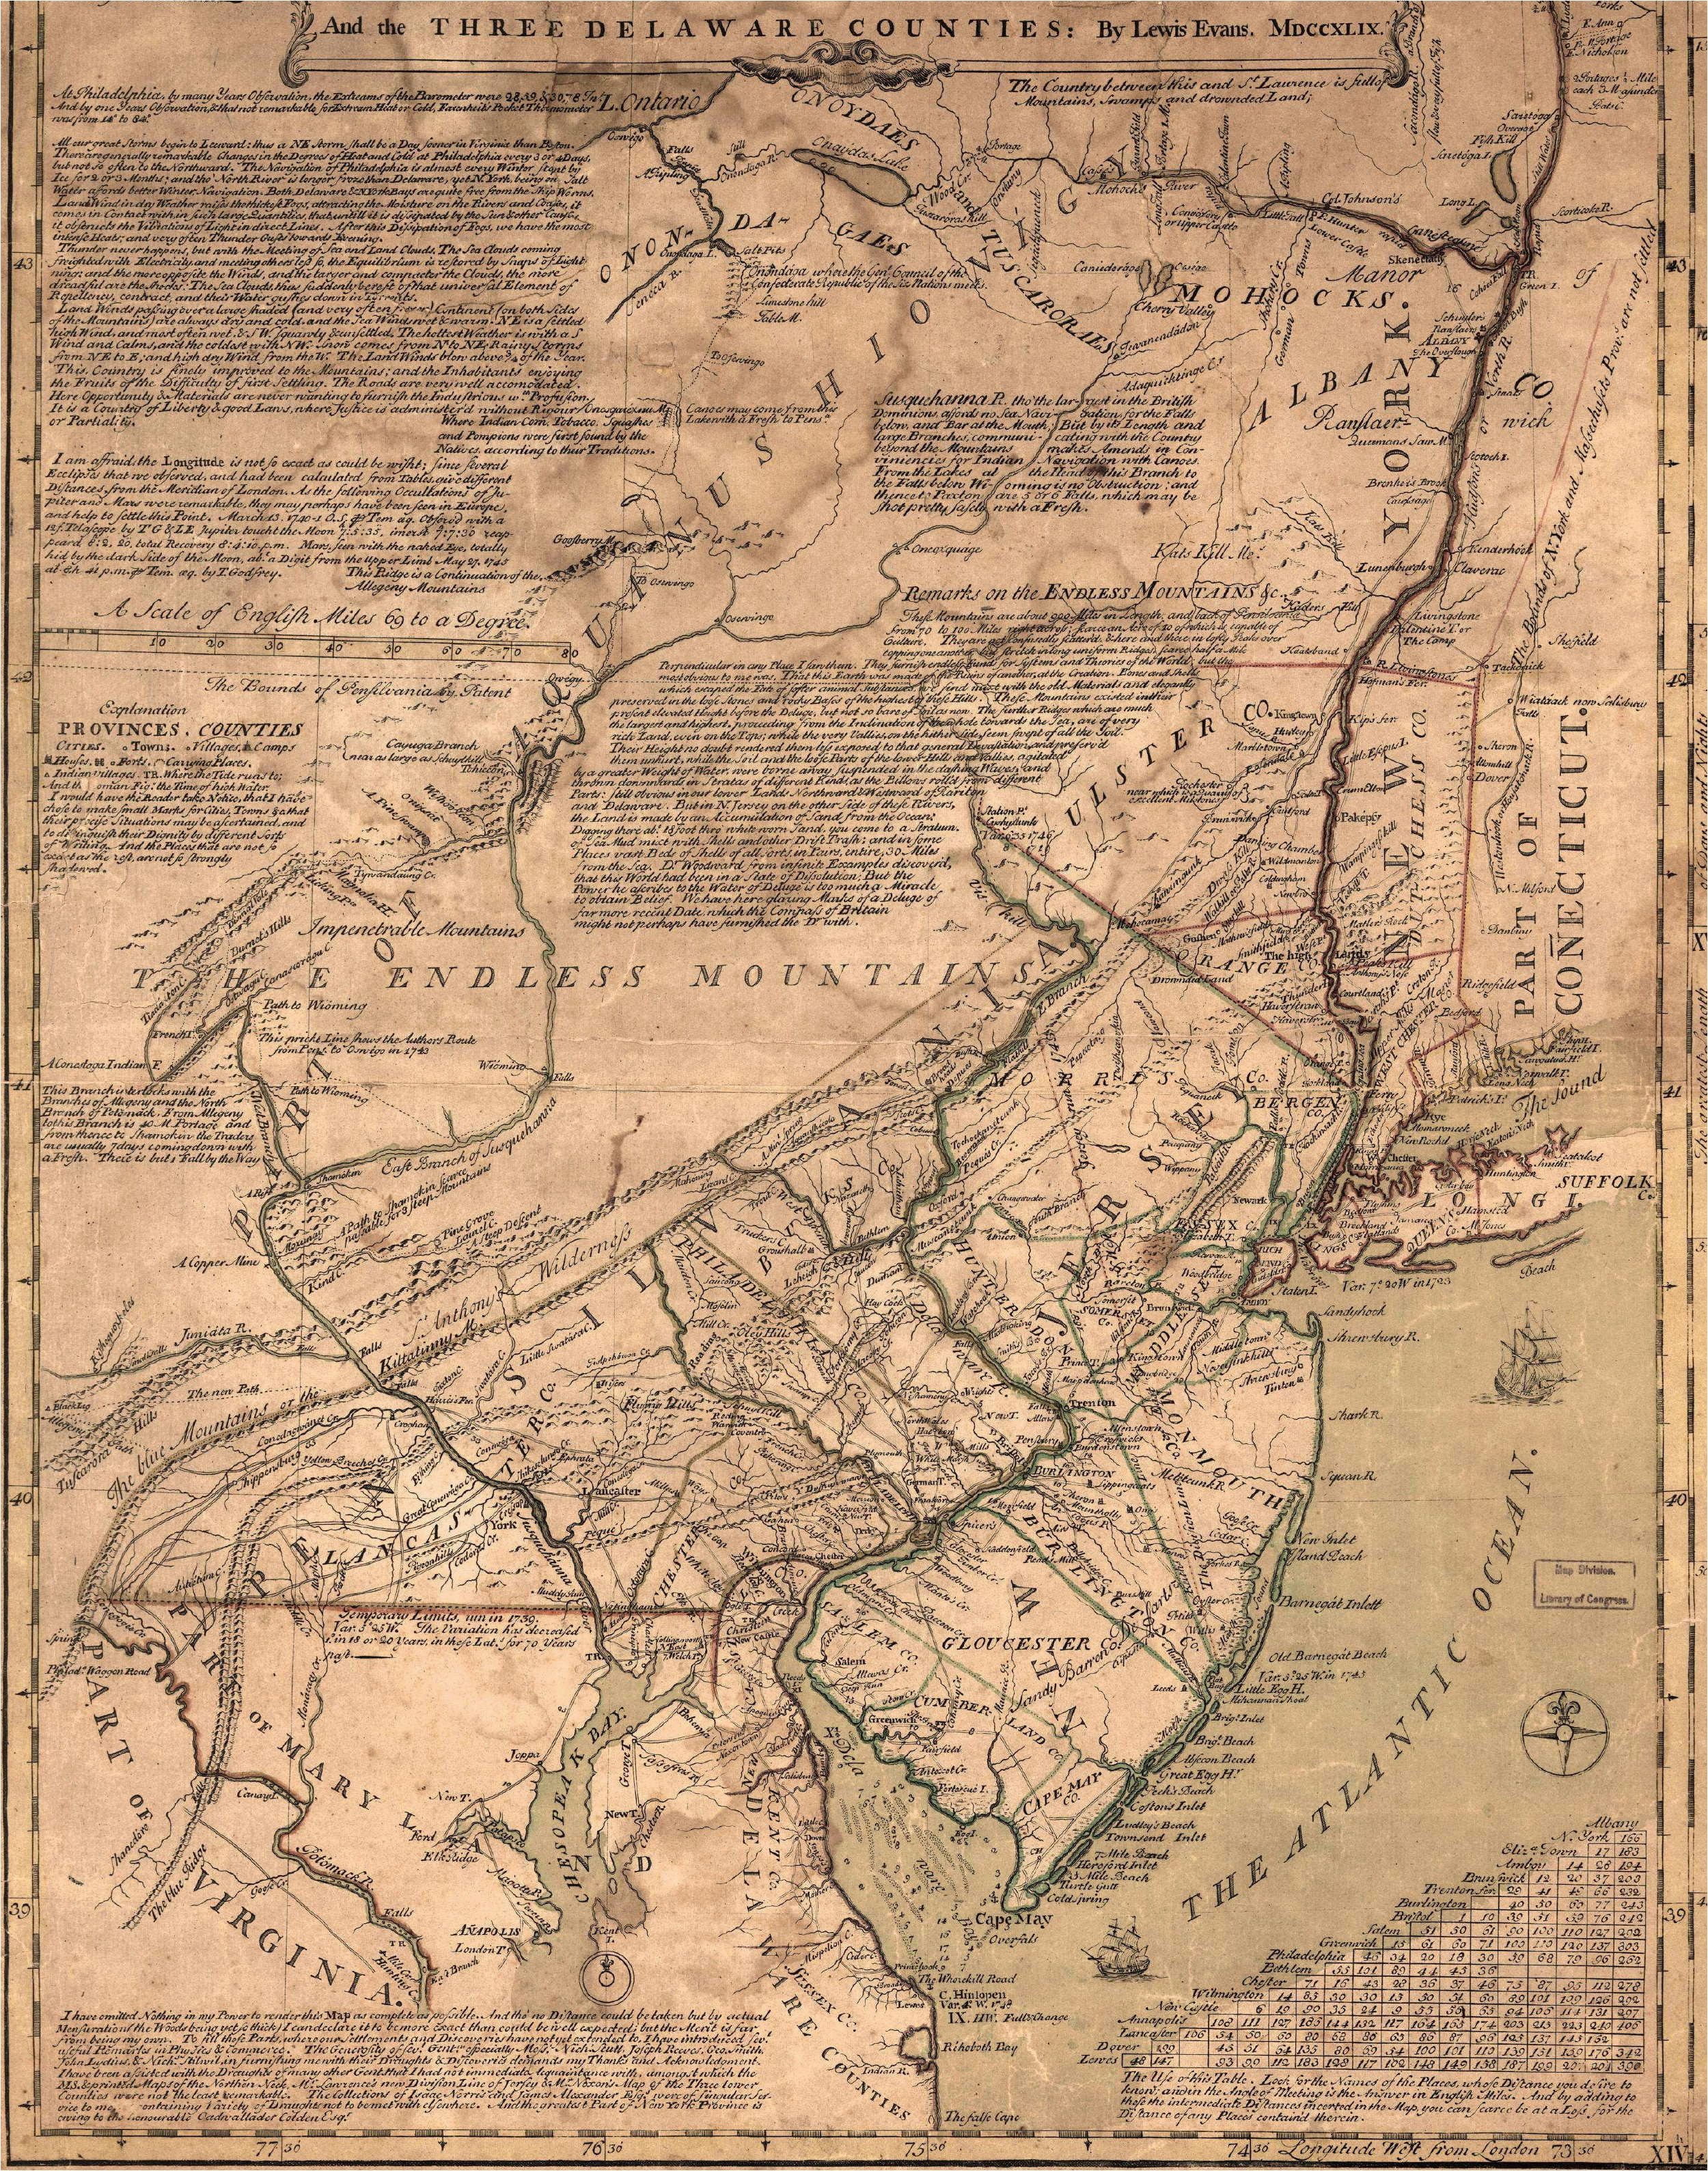 1740 s pennsylvania maps